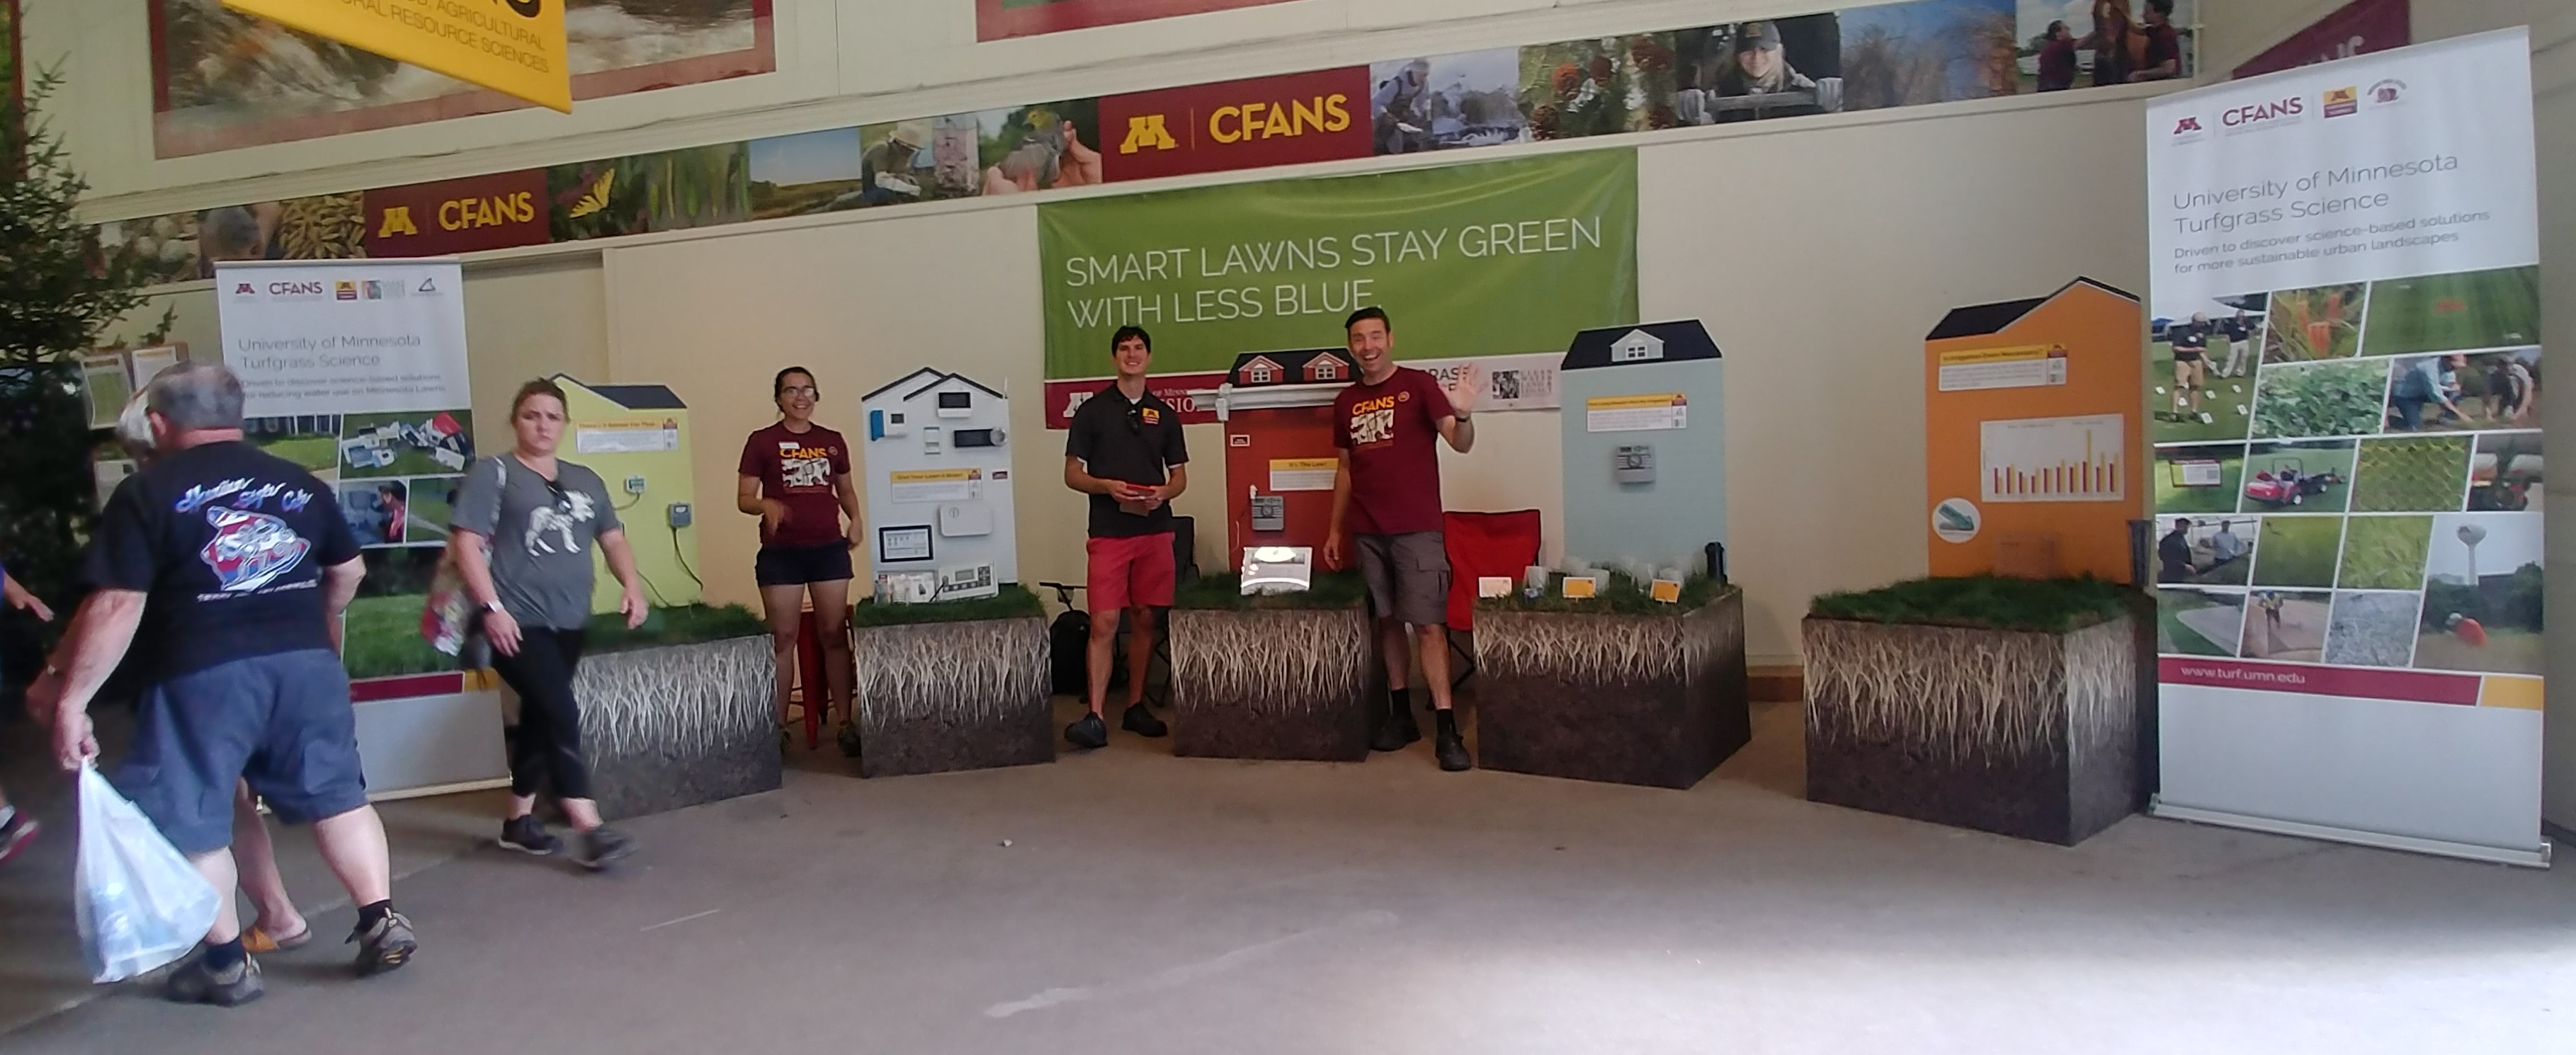 UMN turfgrass team at the state fair standing near a display